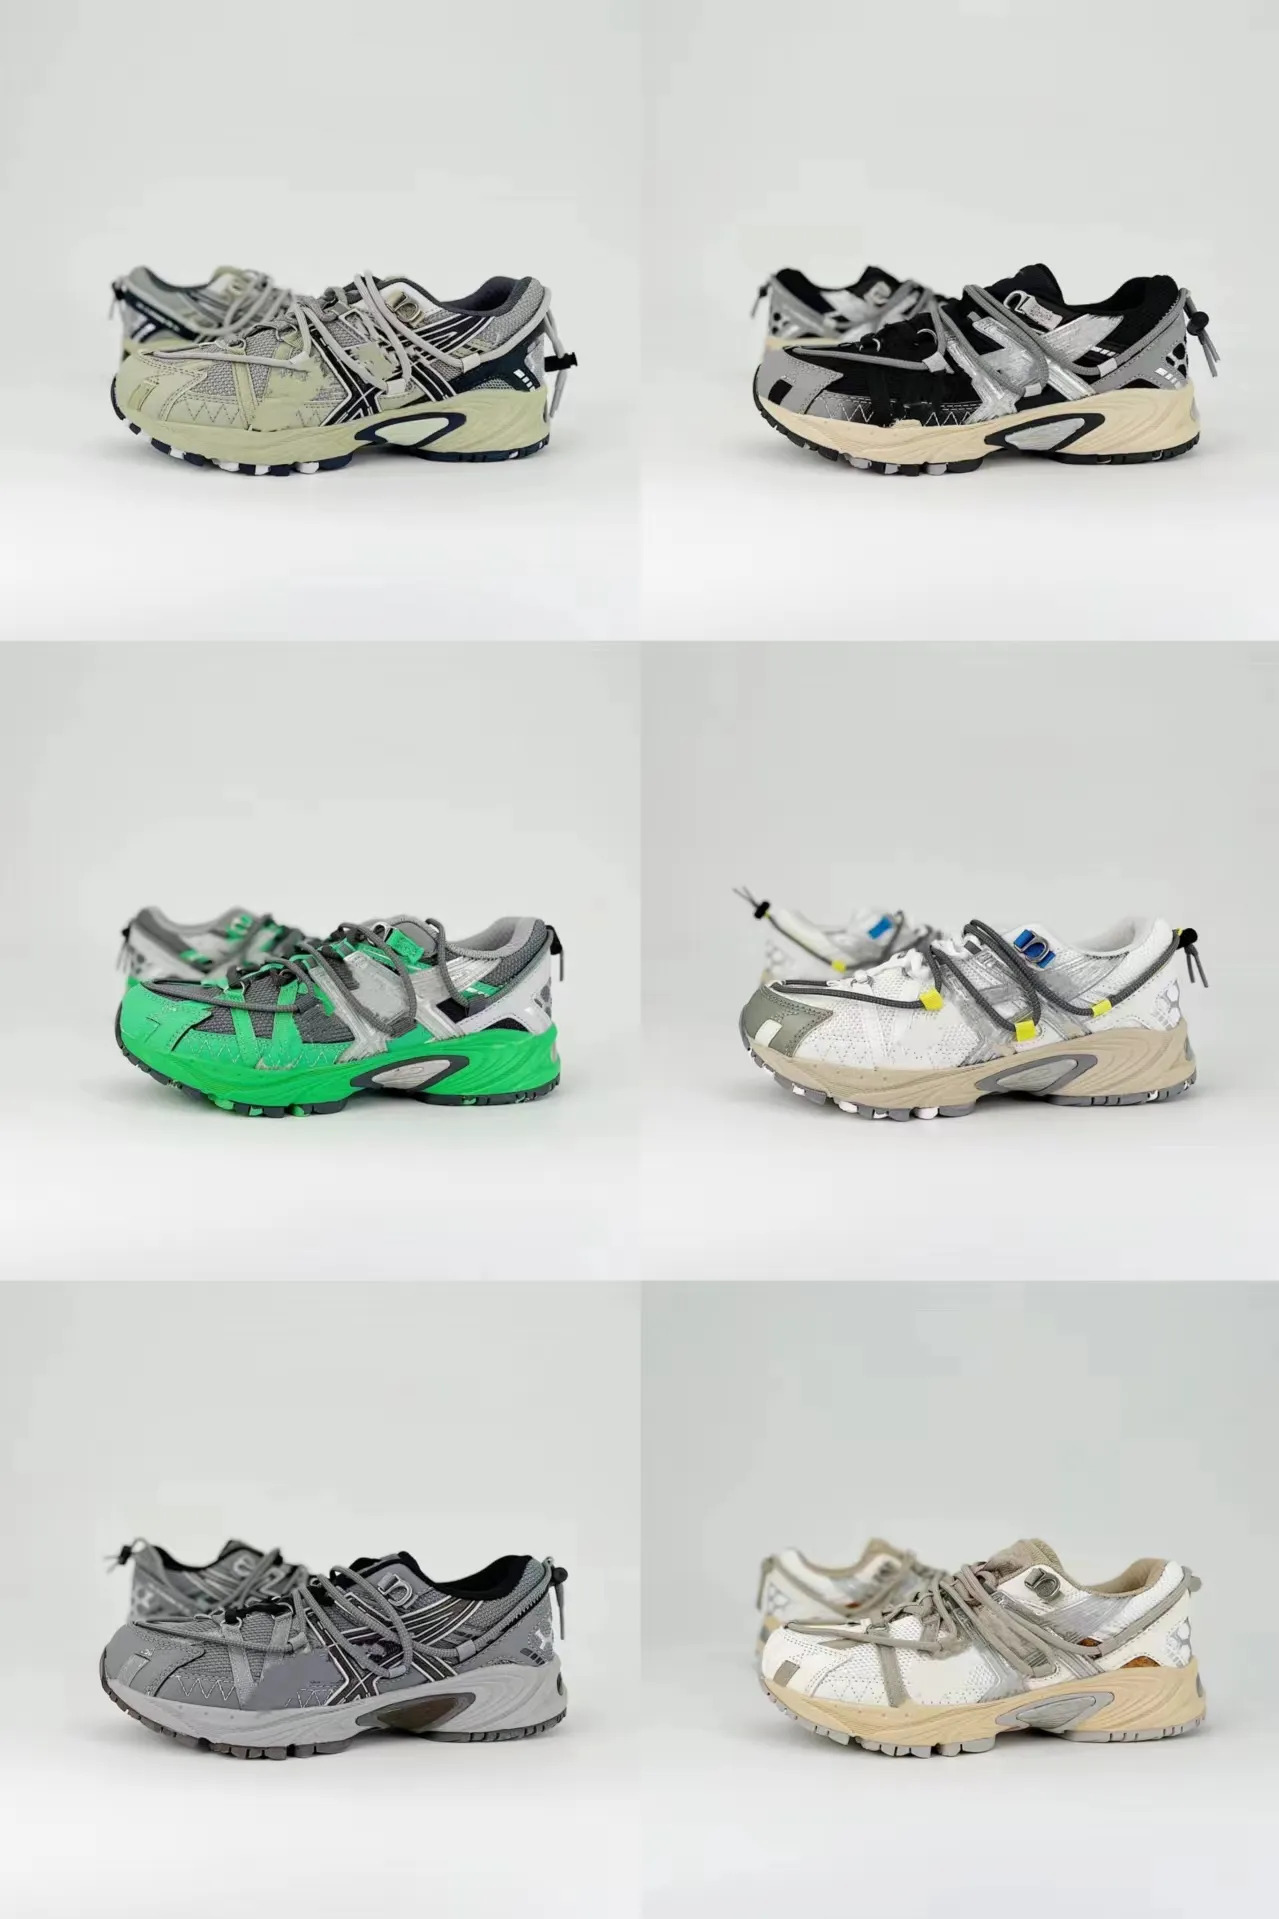 Tiger Ka Hana Tr V2 Retro Functional Casual Sneaker Shoe Design Conception continue les chaussures de la série.